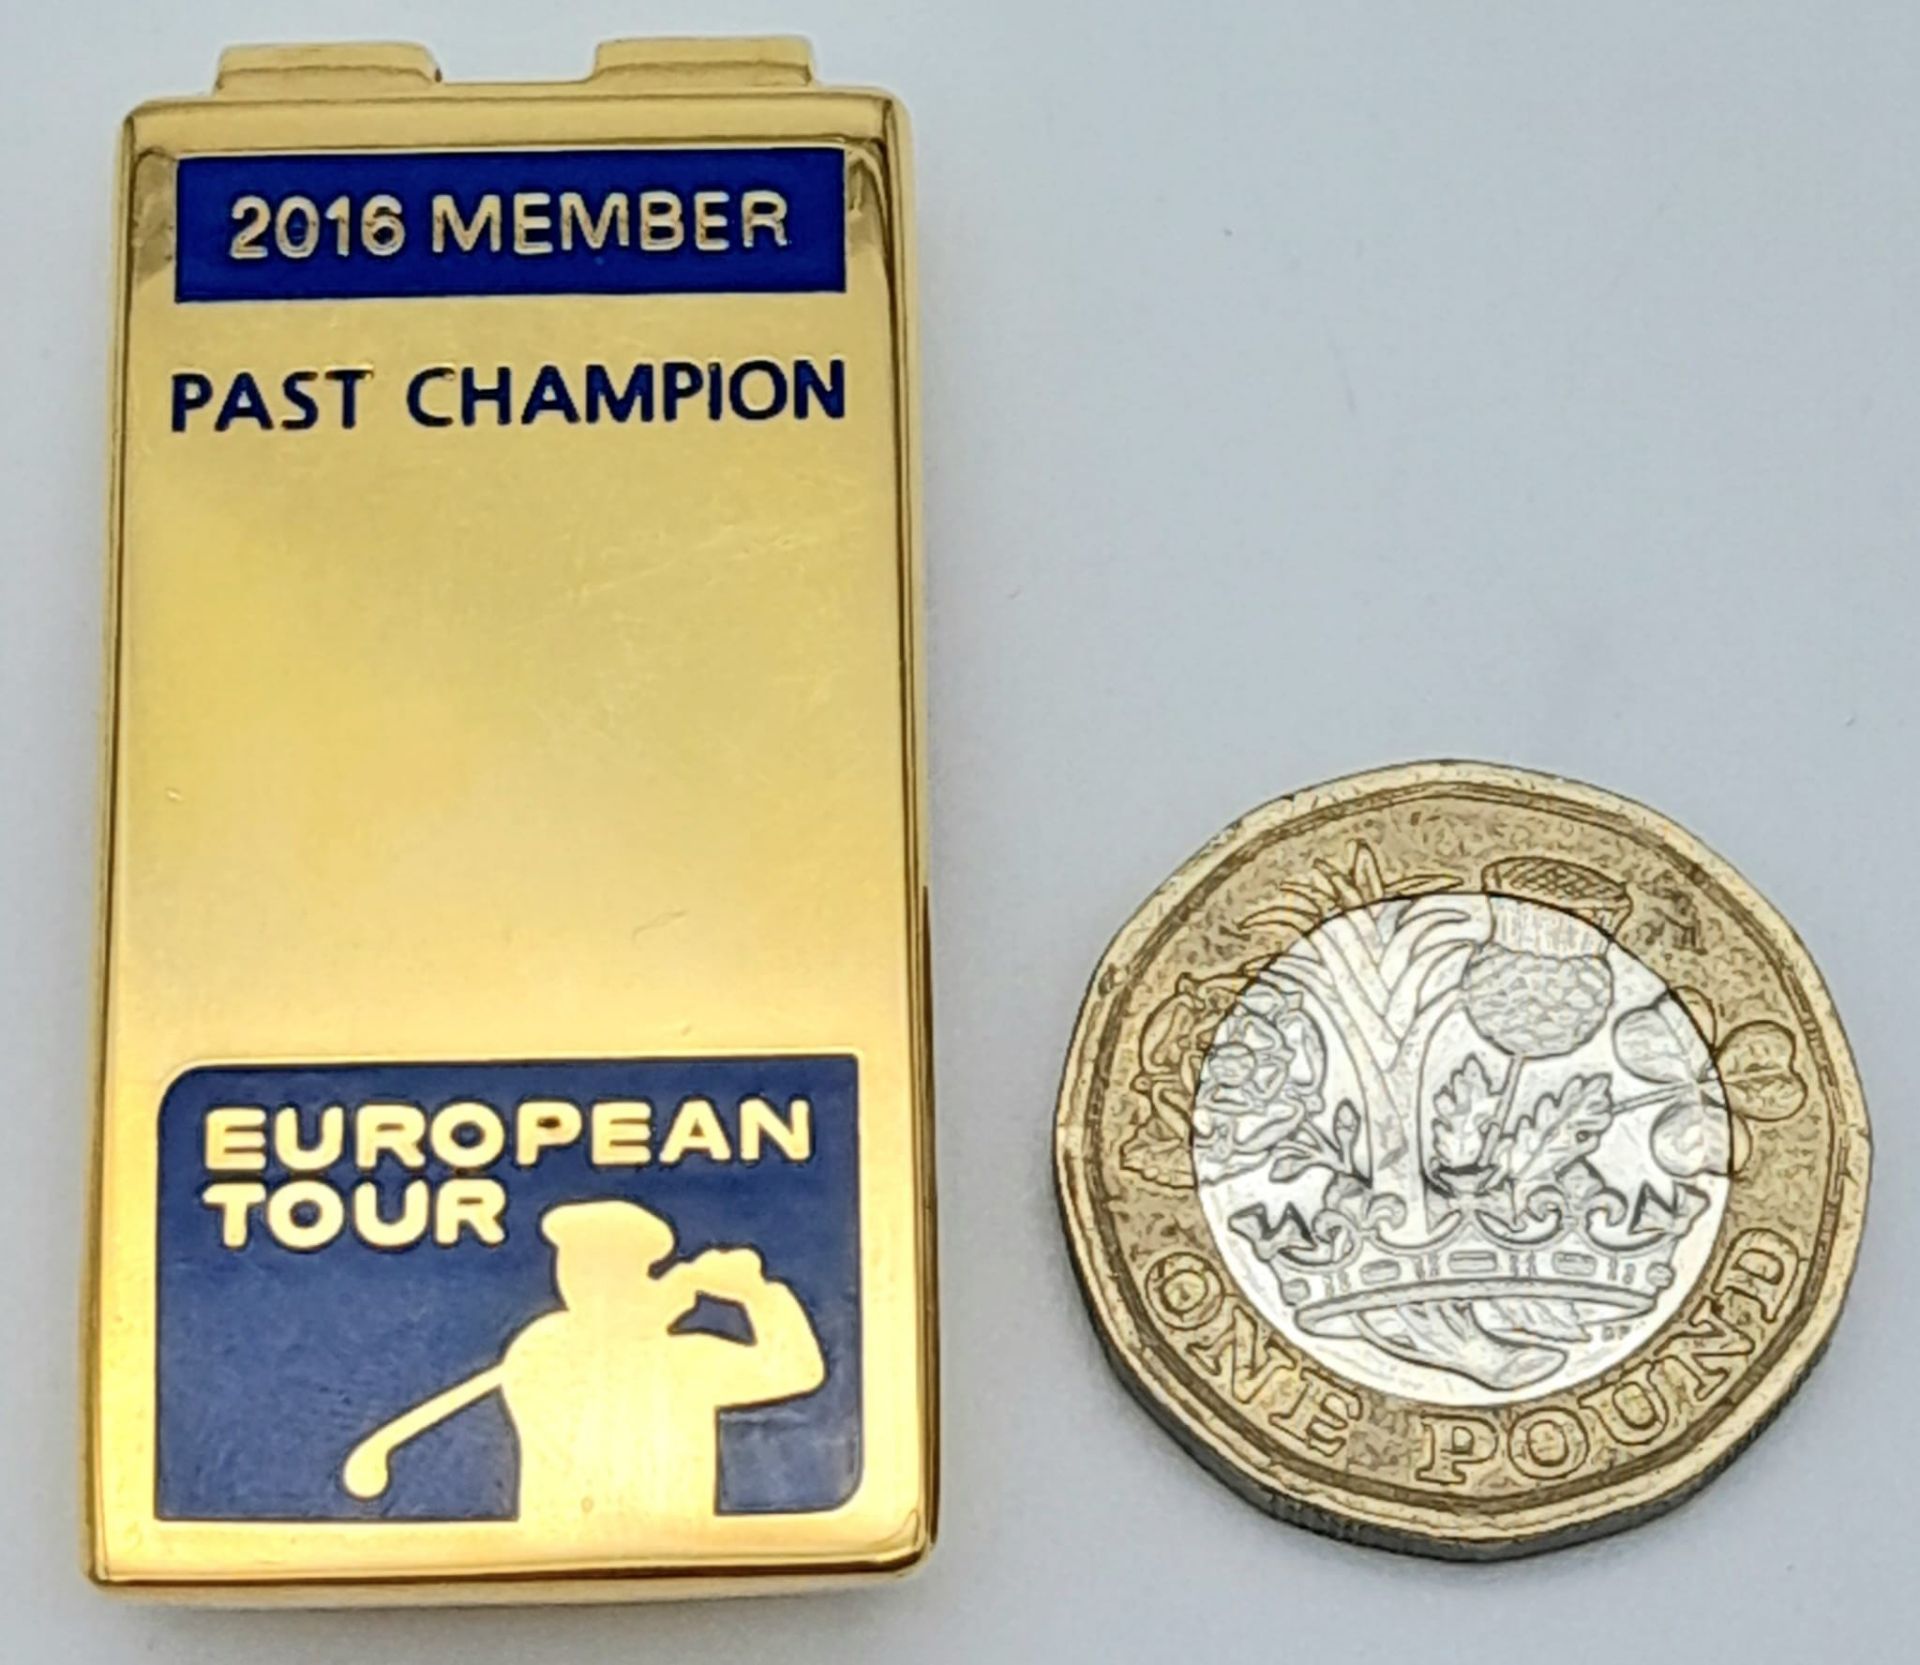 GOLD TONE MONEY CLIP 2016 MEMBER PAST CHAMPION EUROPEAN TOUR GOLF THEMED - Image 2 of 4